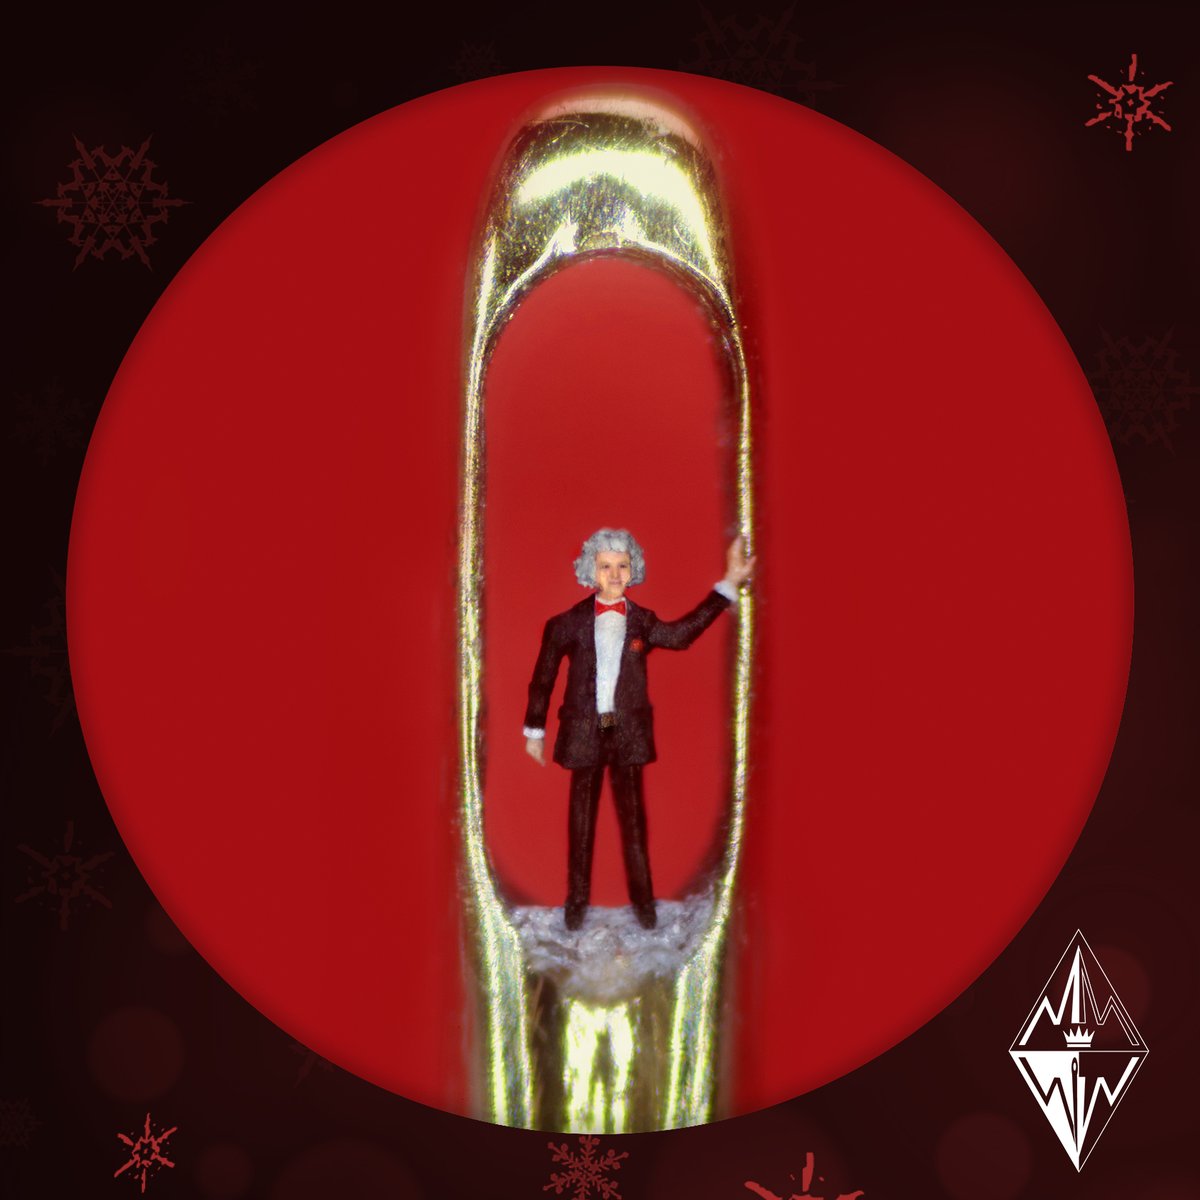 Microscopic Noddy Holder in the Eye of a Gold Needle 🤘 #slade #noddyholder #Christmas2023